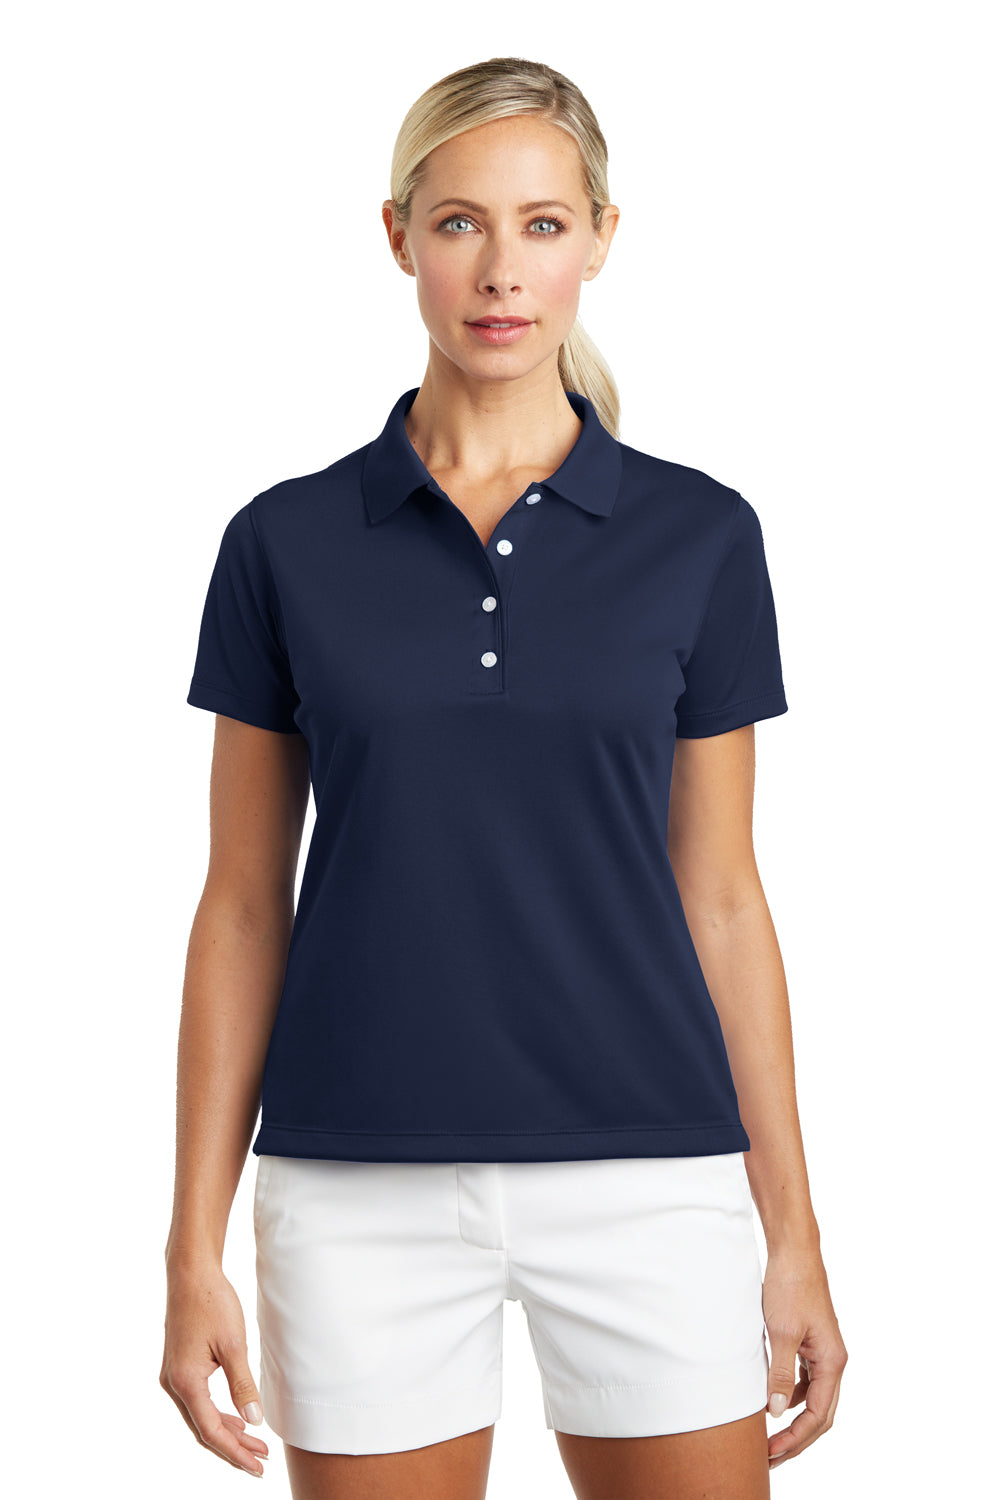 Nike 203697 Womens Tech Basic Dri-Fit Moisture Wicking Short Sleeve Polo Shirt Midnight Navy Blue Model Front